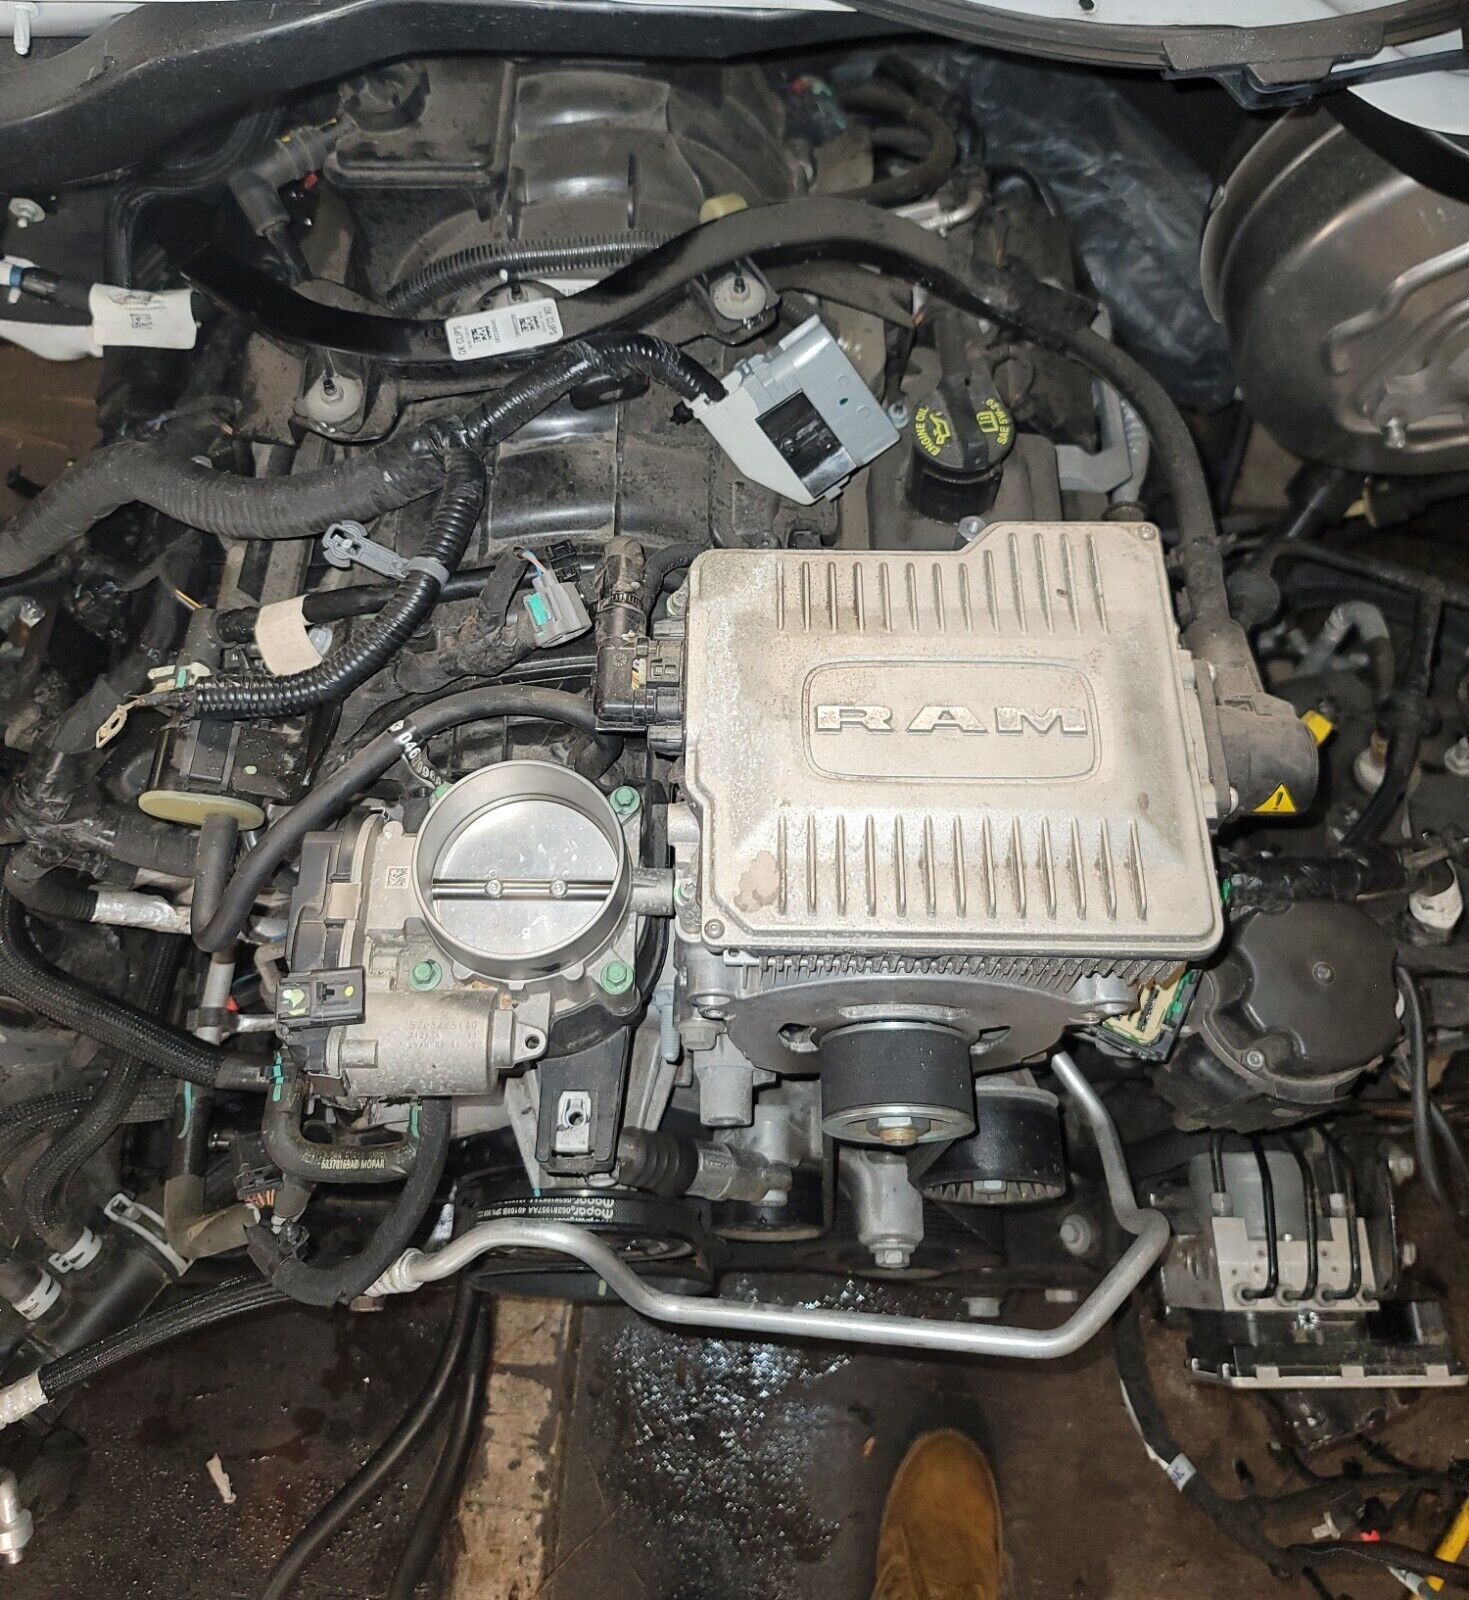 2021 E-TORQUE Dodge Ram Engine 5.7 Hemi , 8 Speed Tranny, 4x4